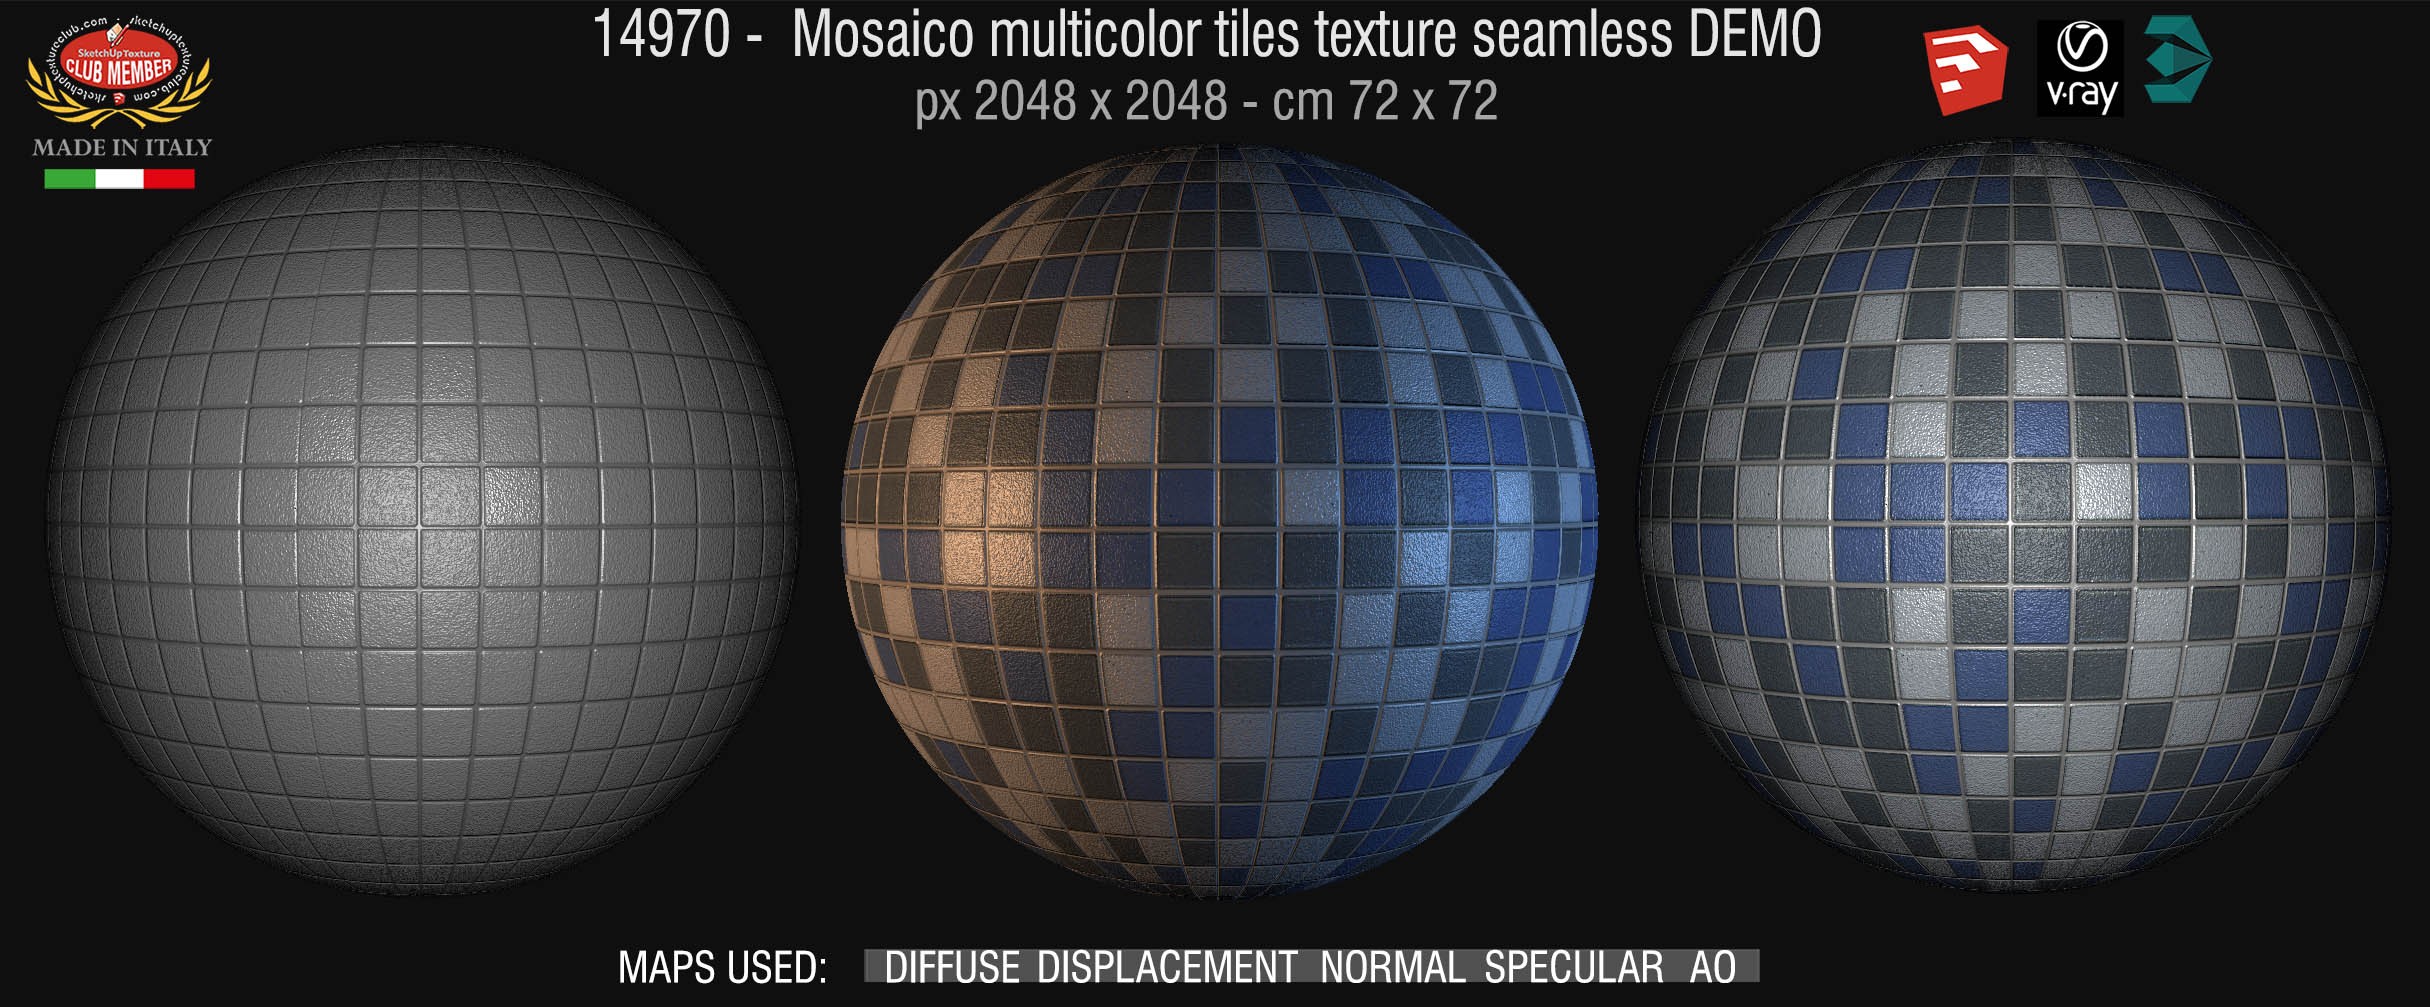 14970 Mosaico multicolor tiles texture seamless + maps DEMO